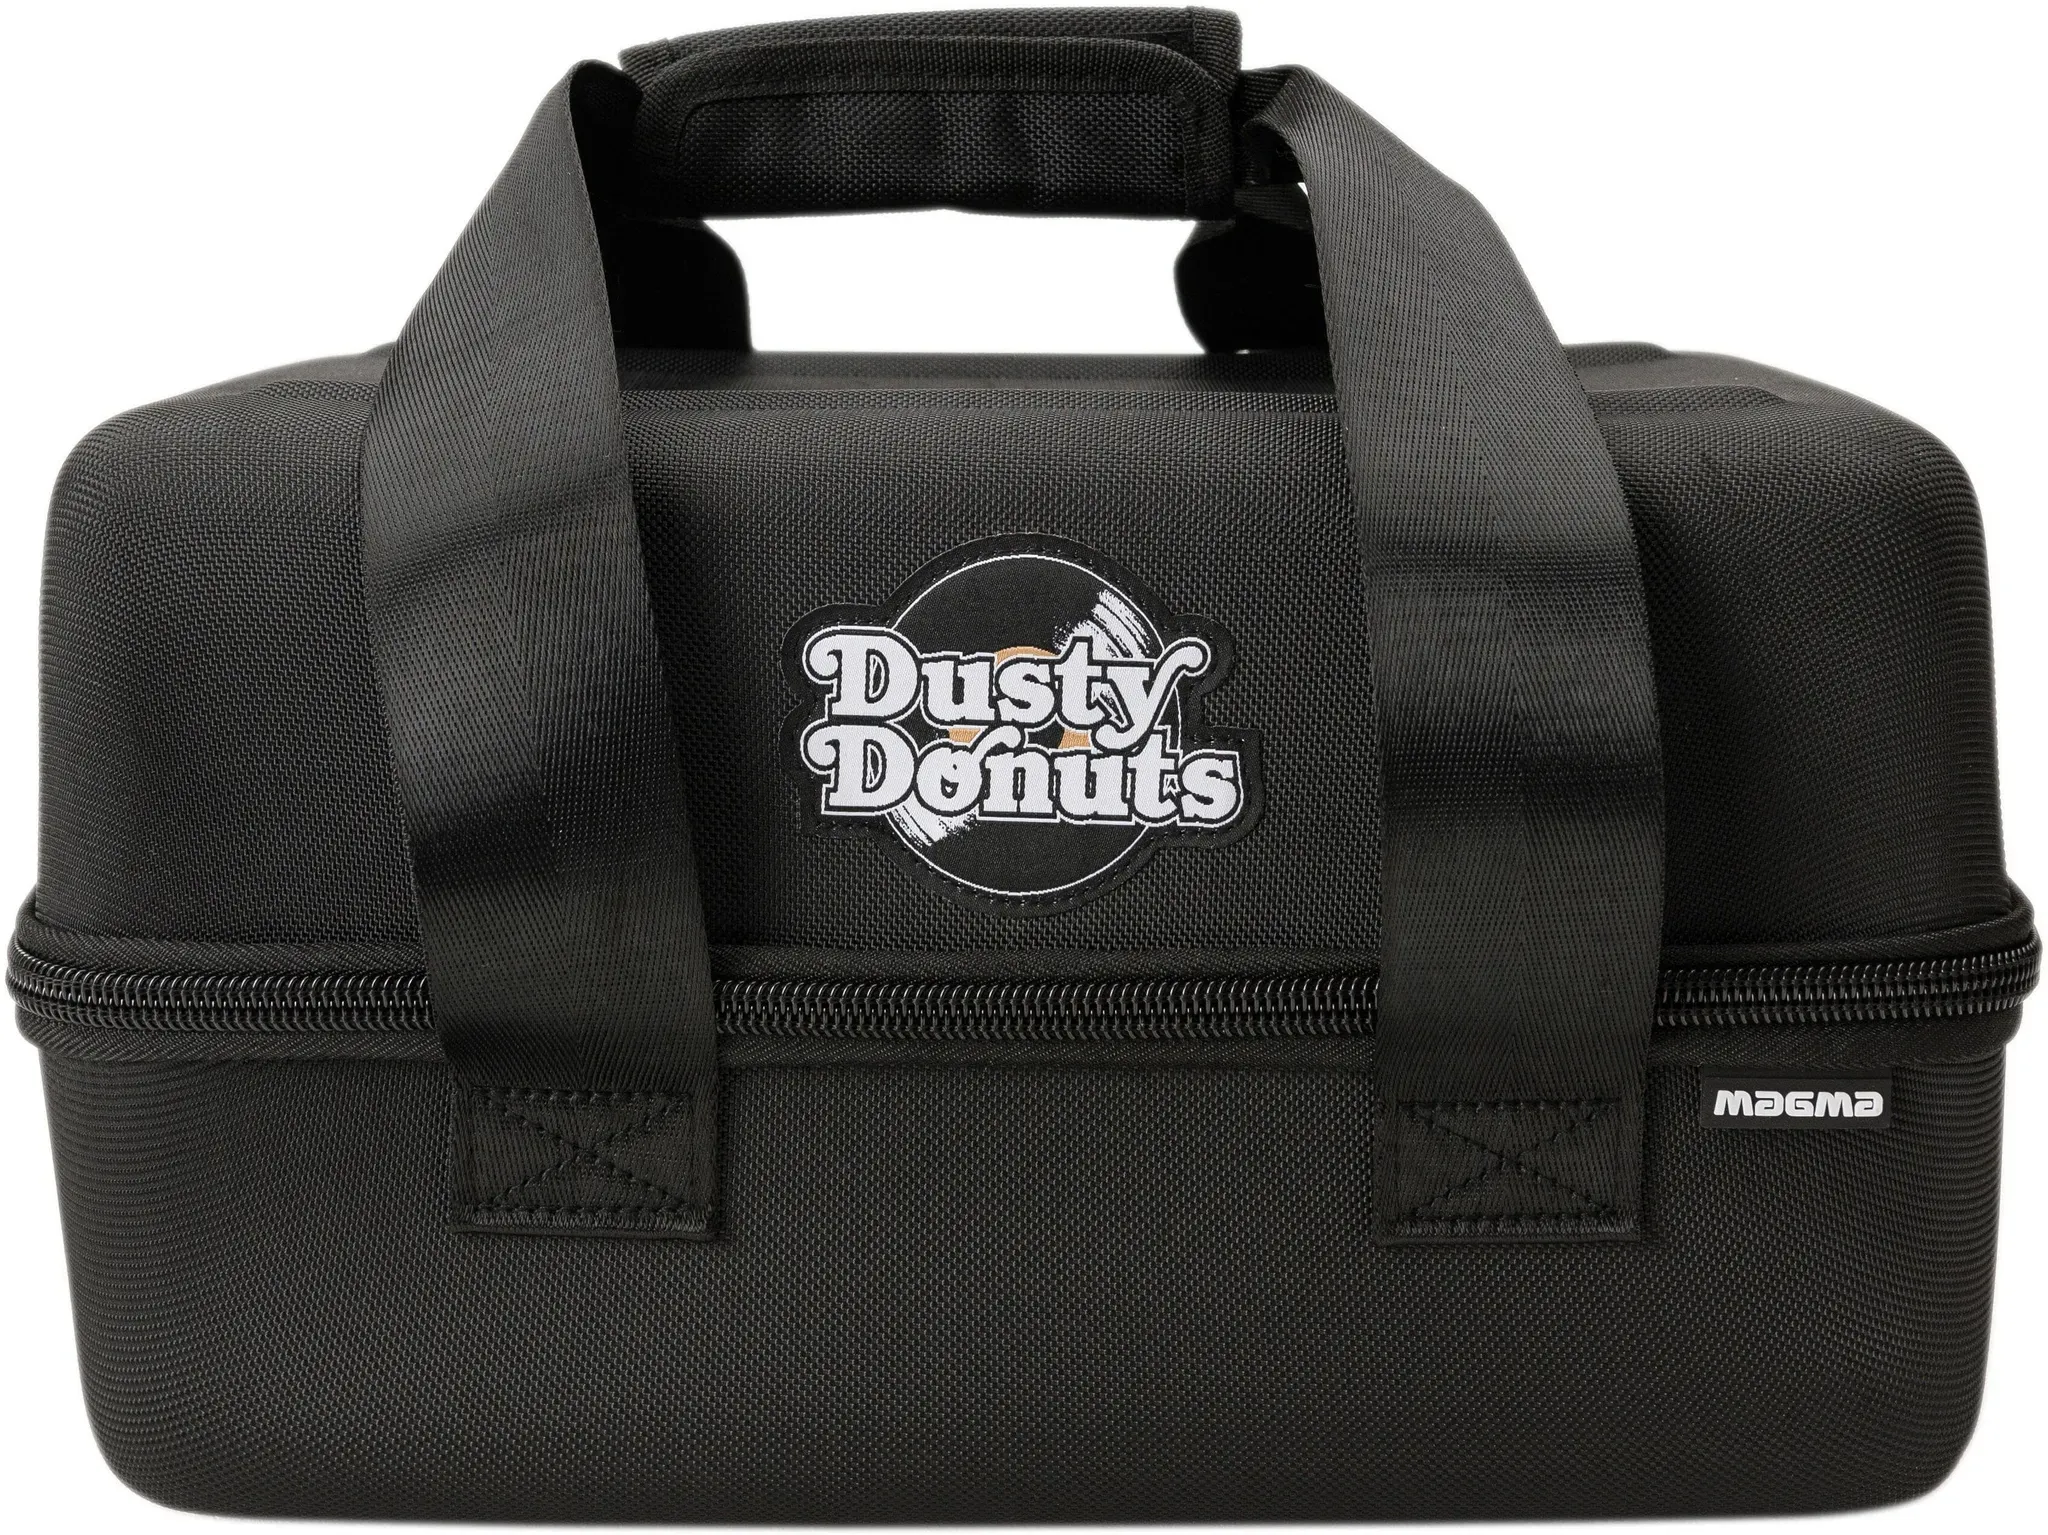 MAGMA 45 Sandwich "Dusty Donuts" Edition - black/dusty-gold